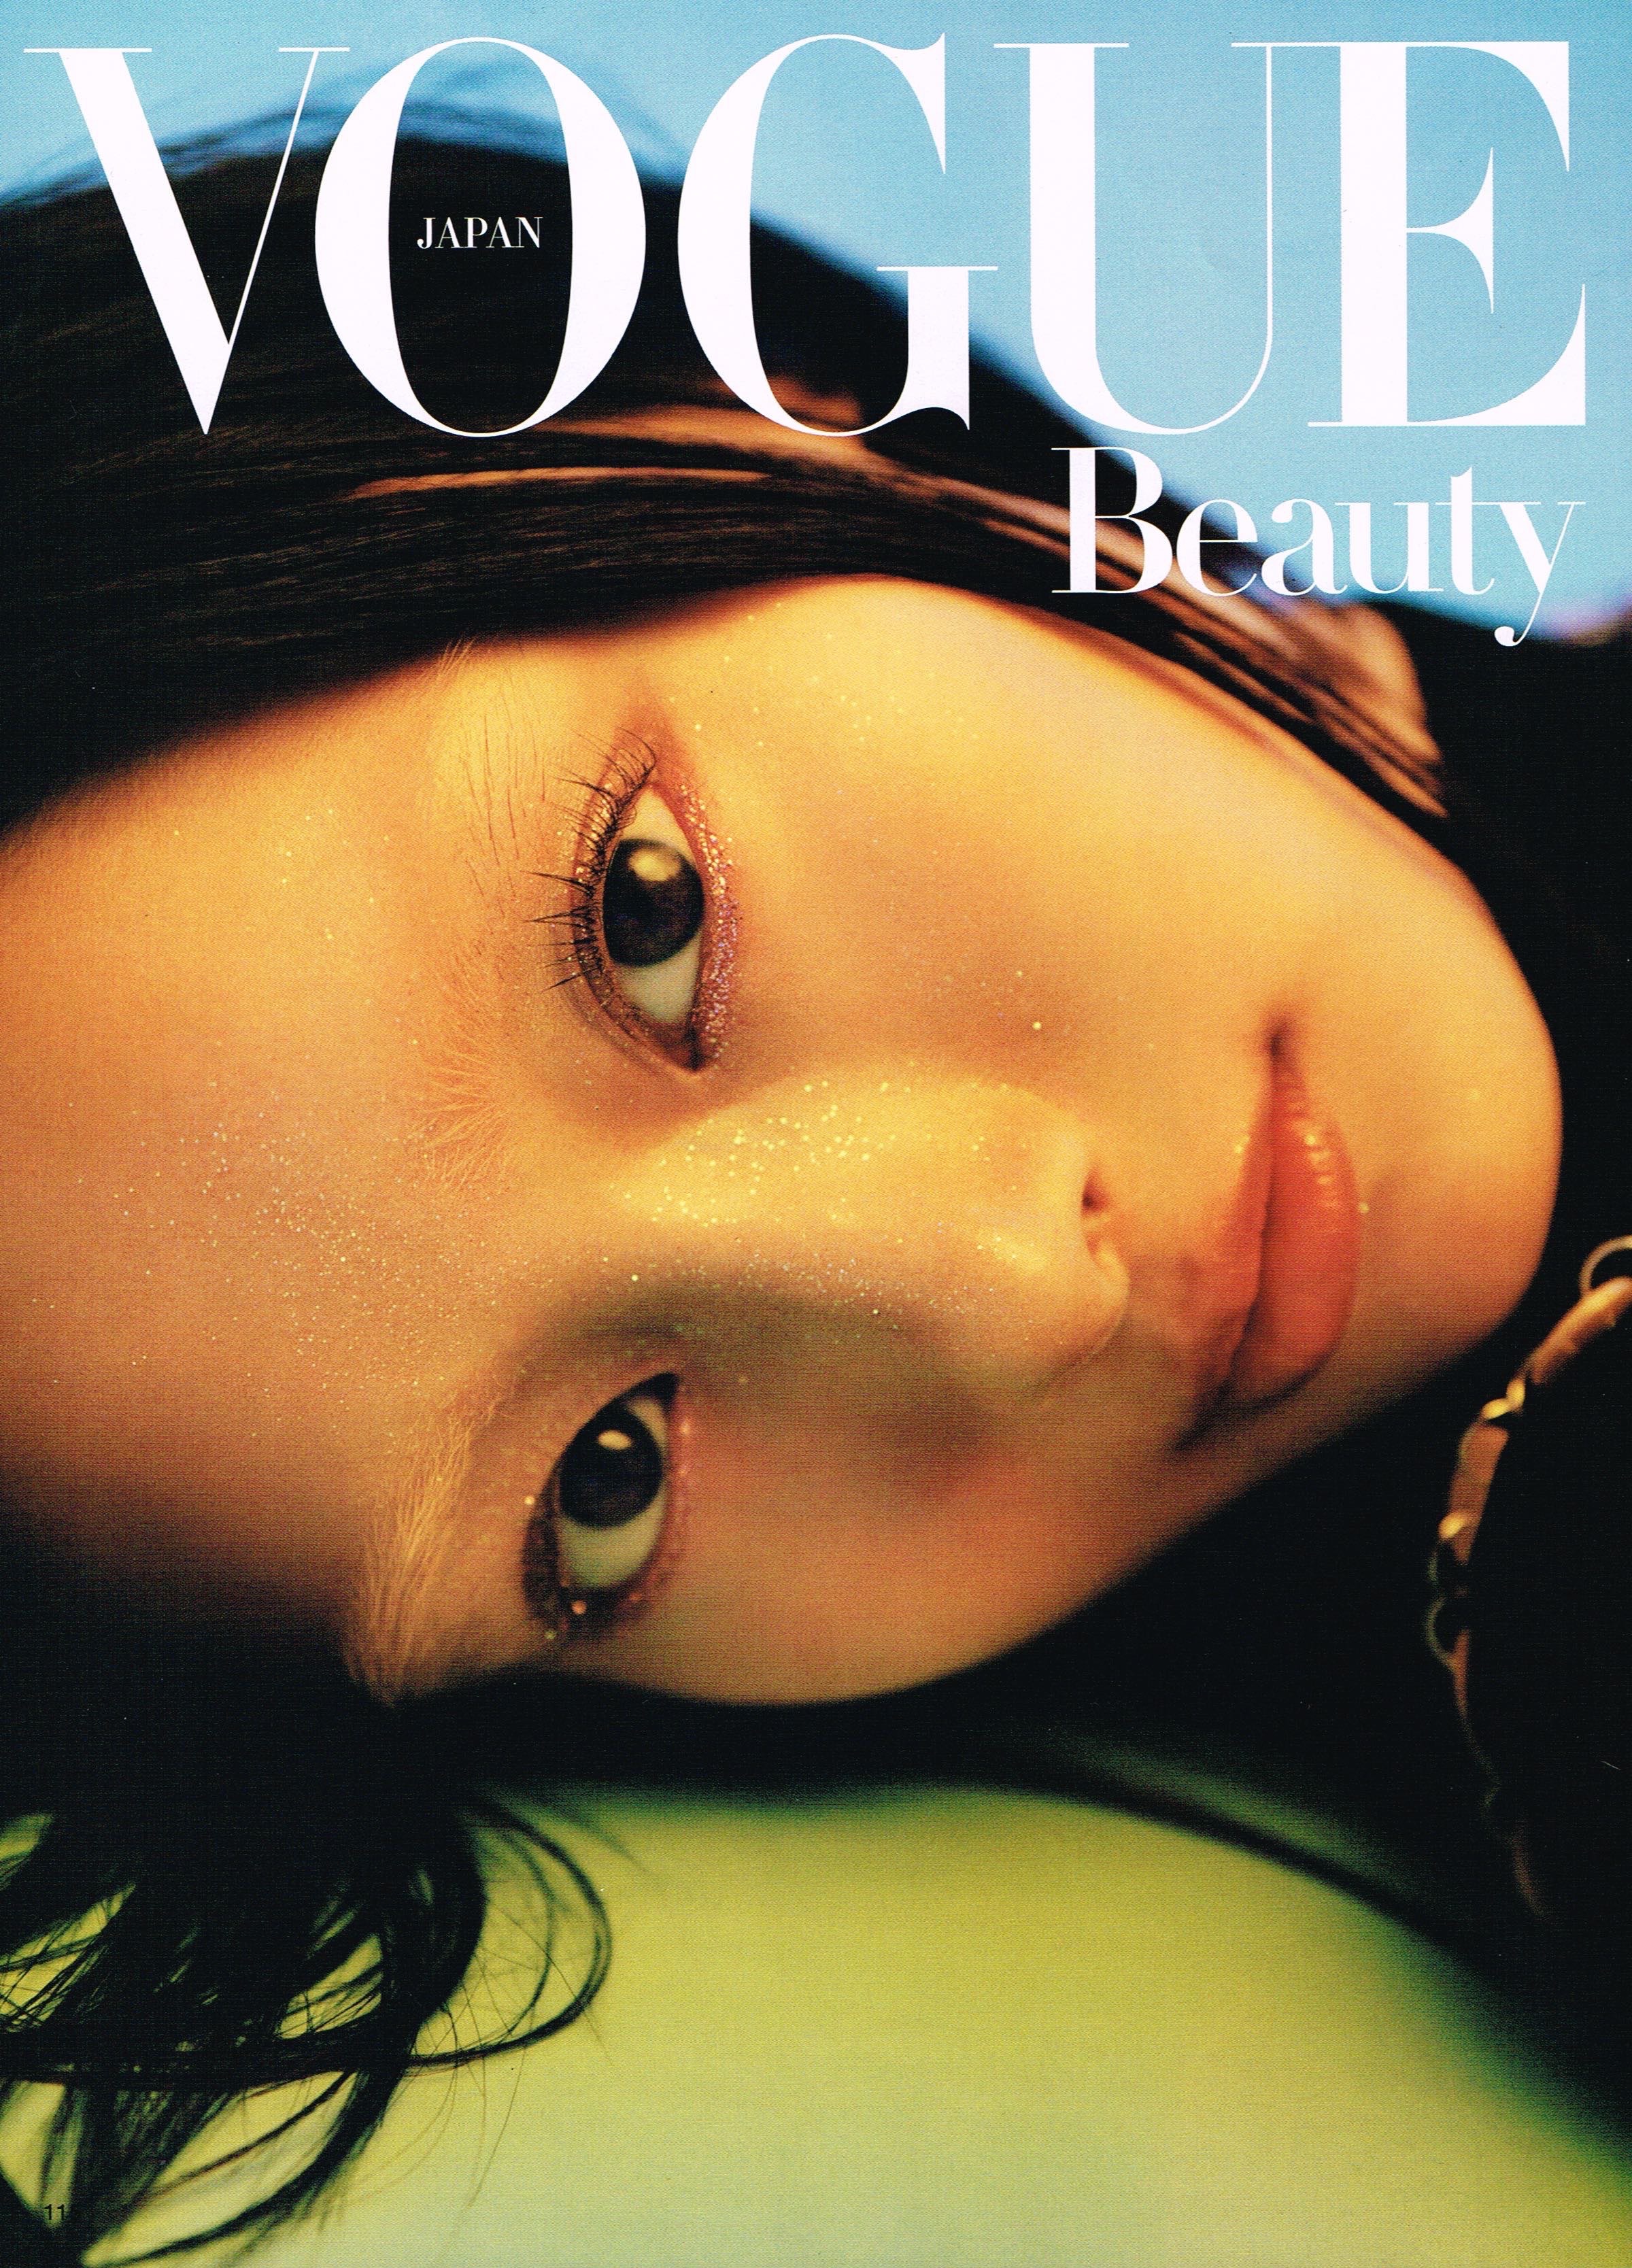 Vogue Japan x Shioli Kutsuna